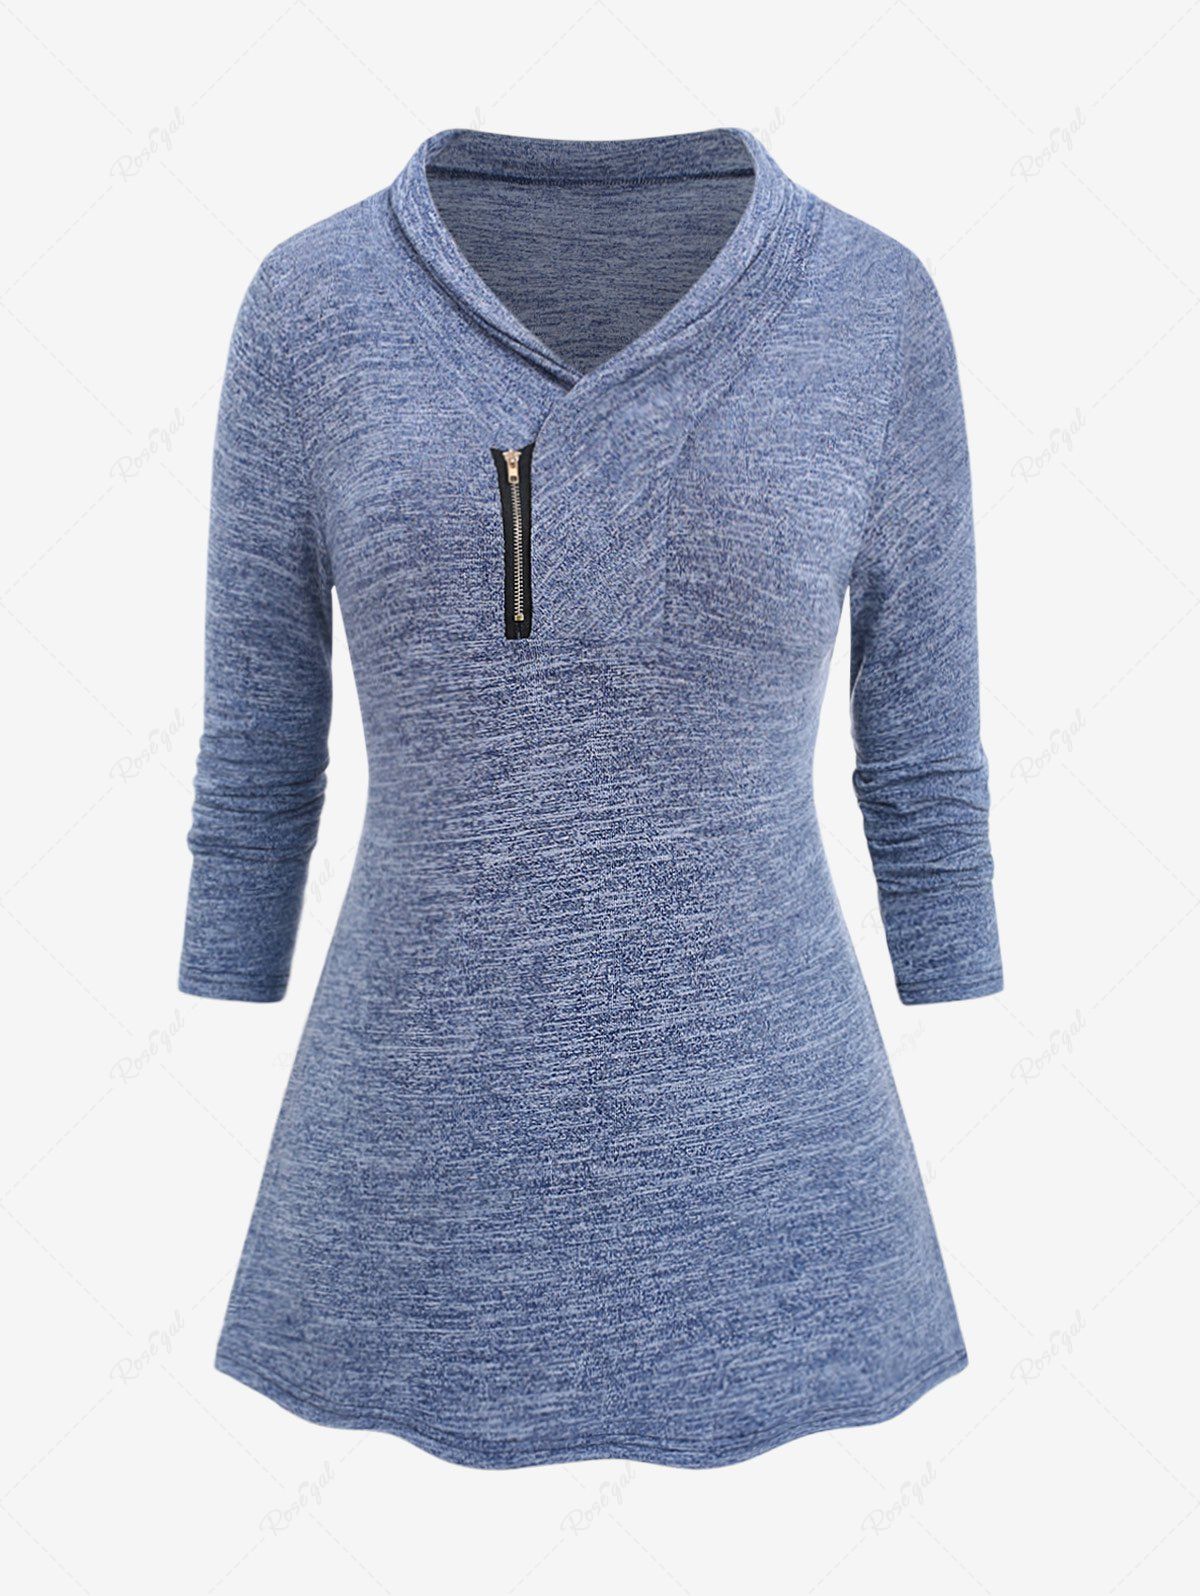 T-shirt Teinté Zippé de Grande Taille Bleu profond L